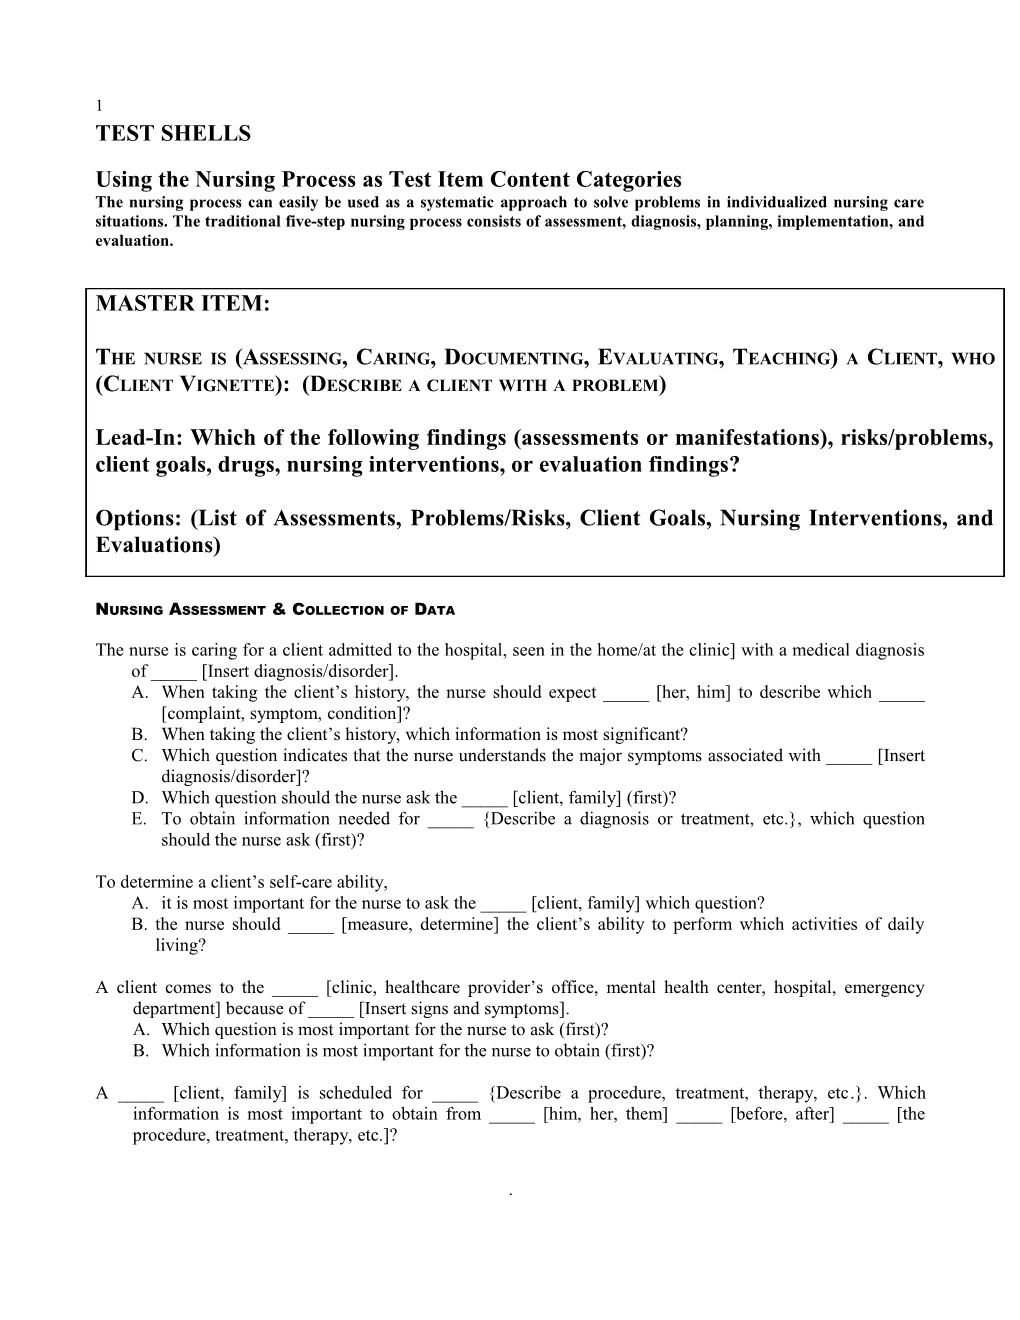 Using the Nursing Process As Test Item Content Categories